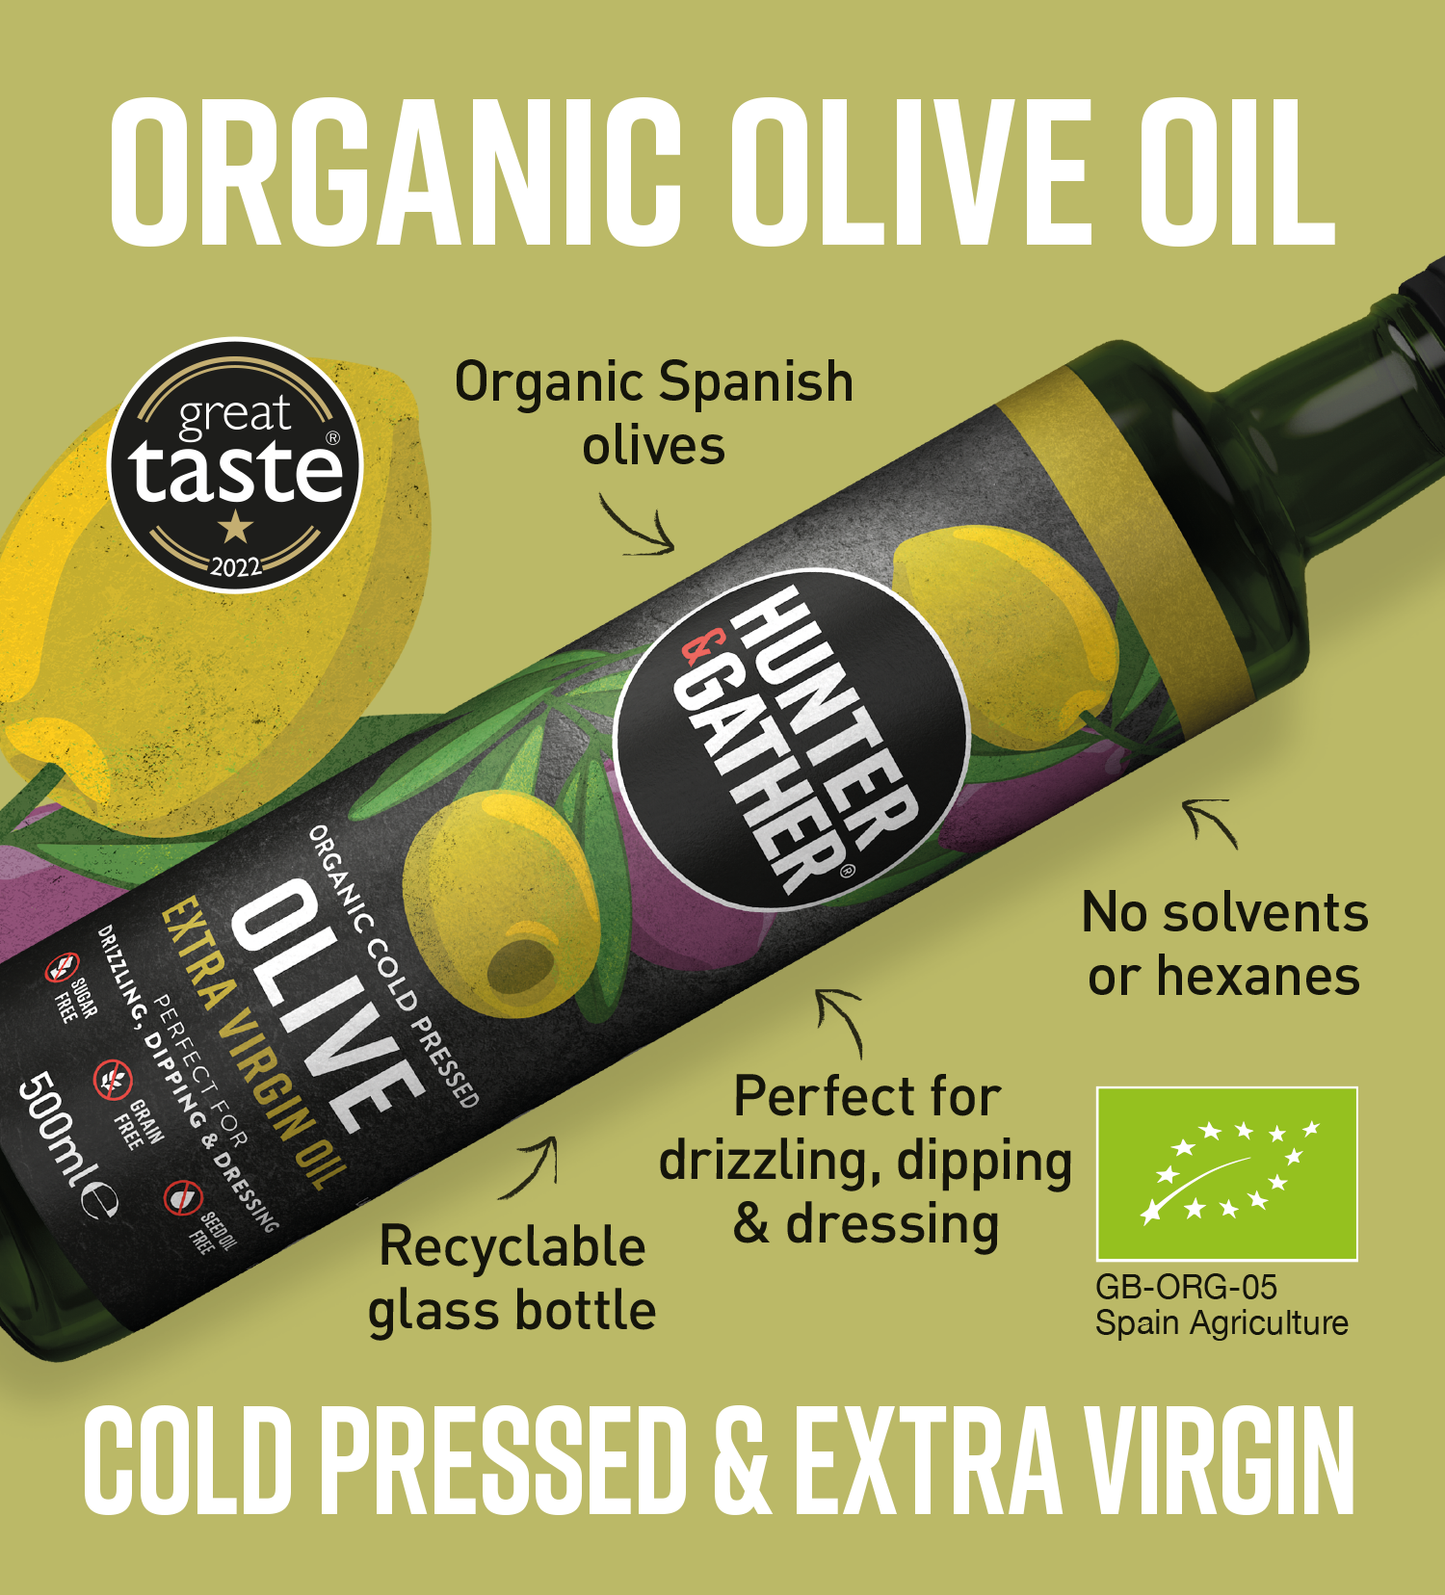 Hunter & Gather Cold Pressed Extra Virgin Olive Oil 500ml